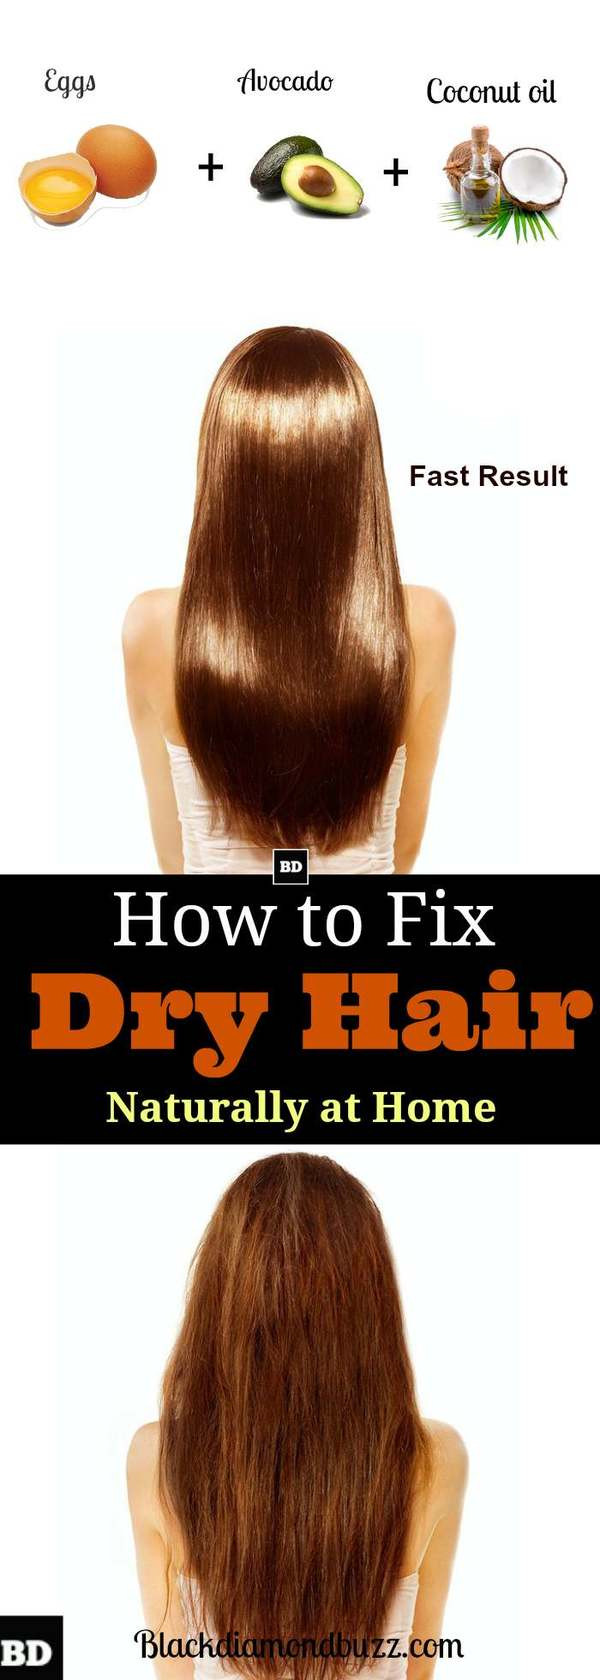 Dry Hair Remedies DIY
 DIY Home Reme s for Dry Hair Overnight Dry Hair Treatments